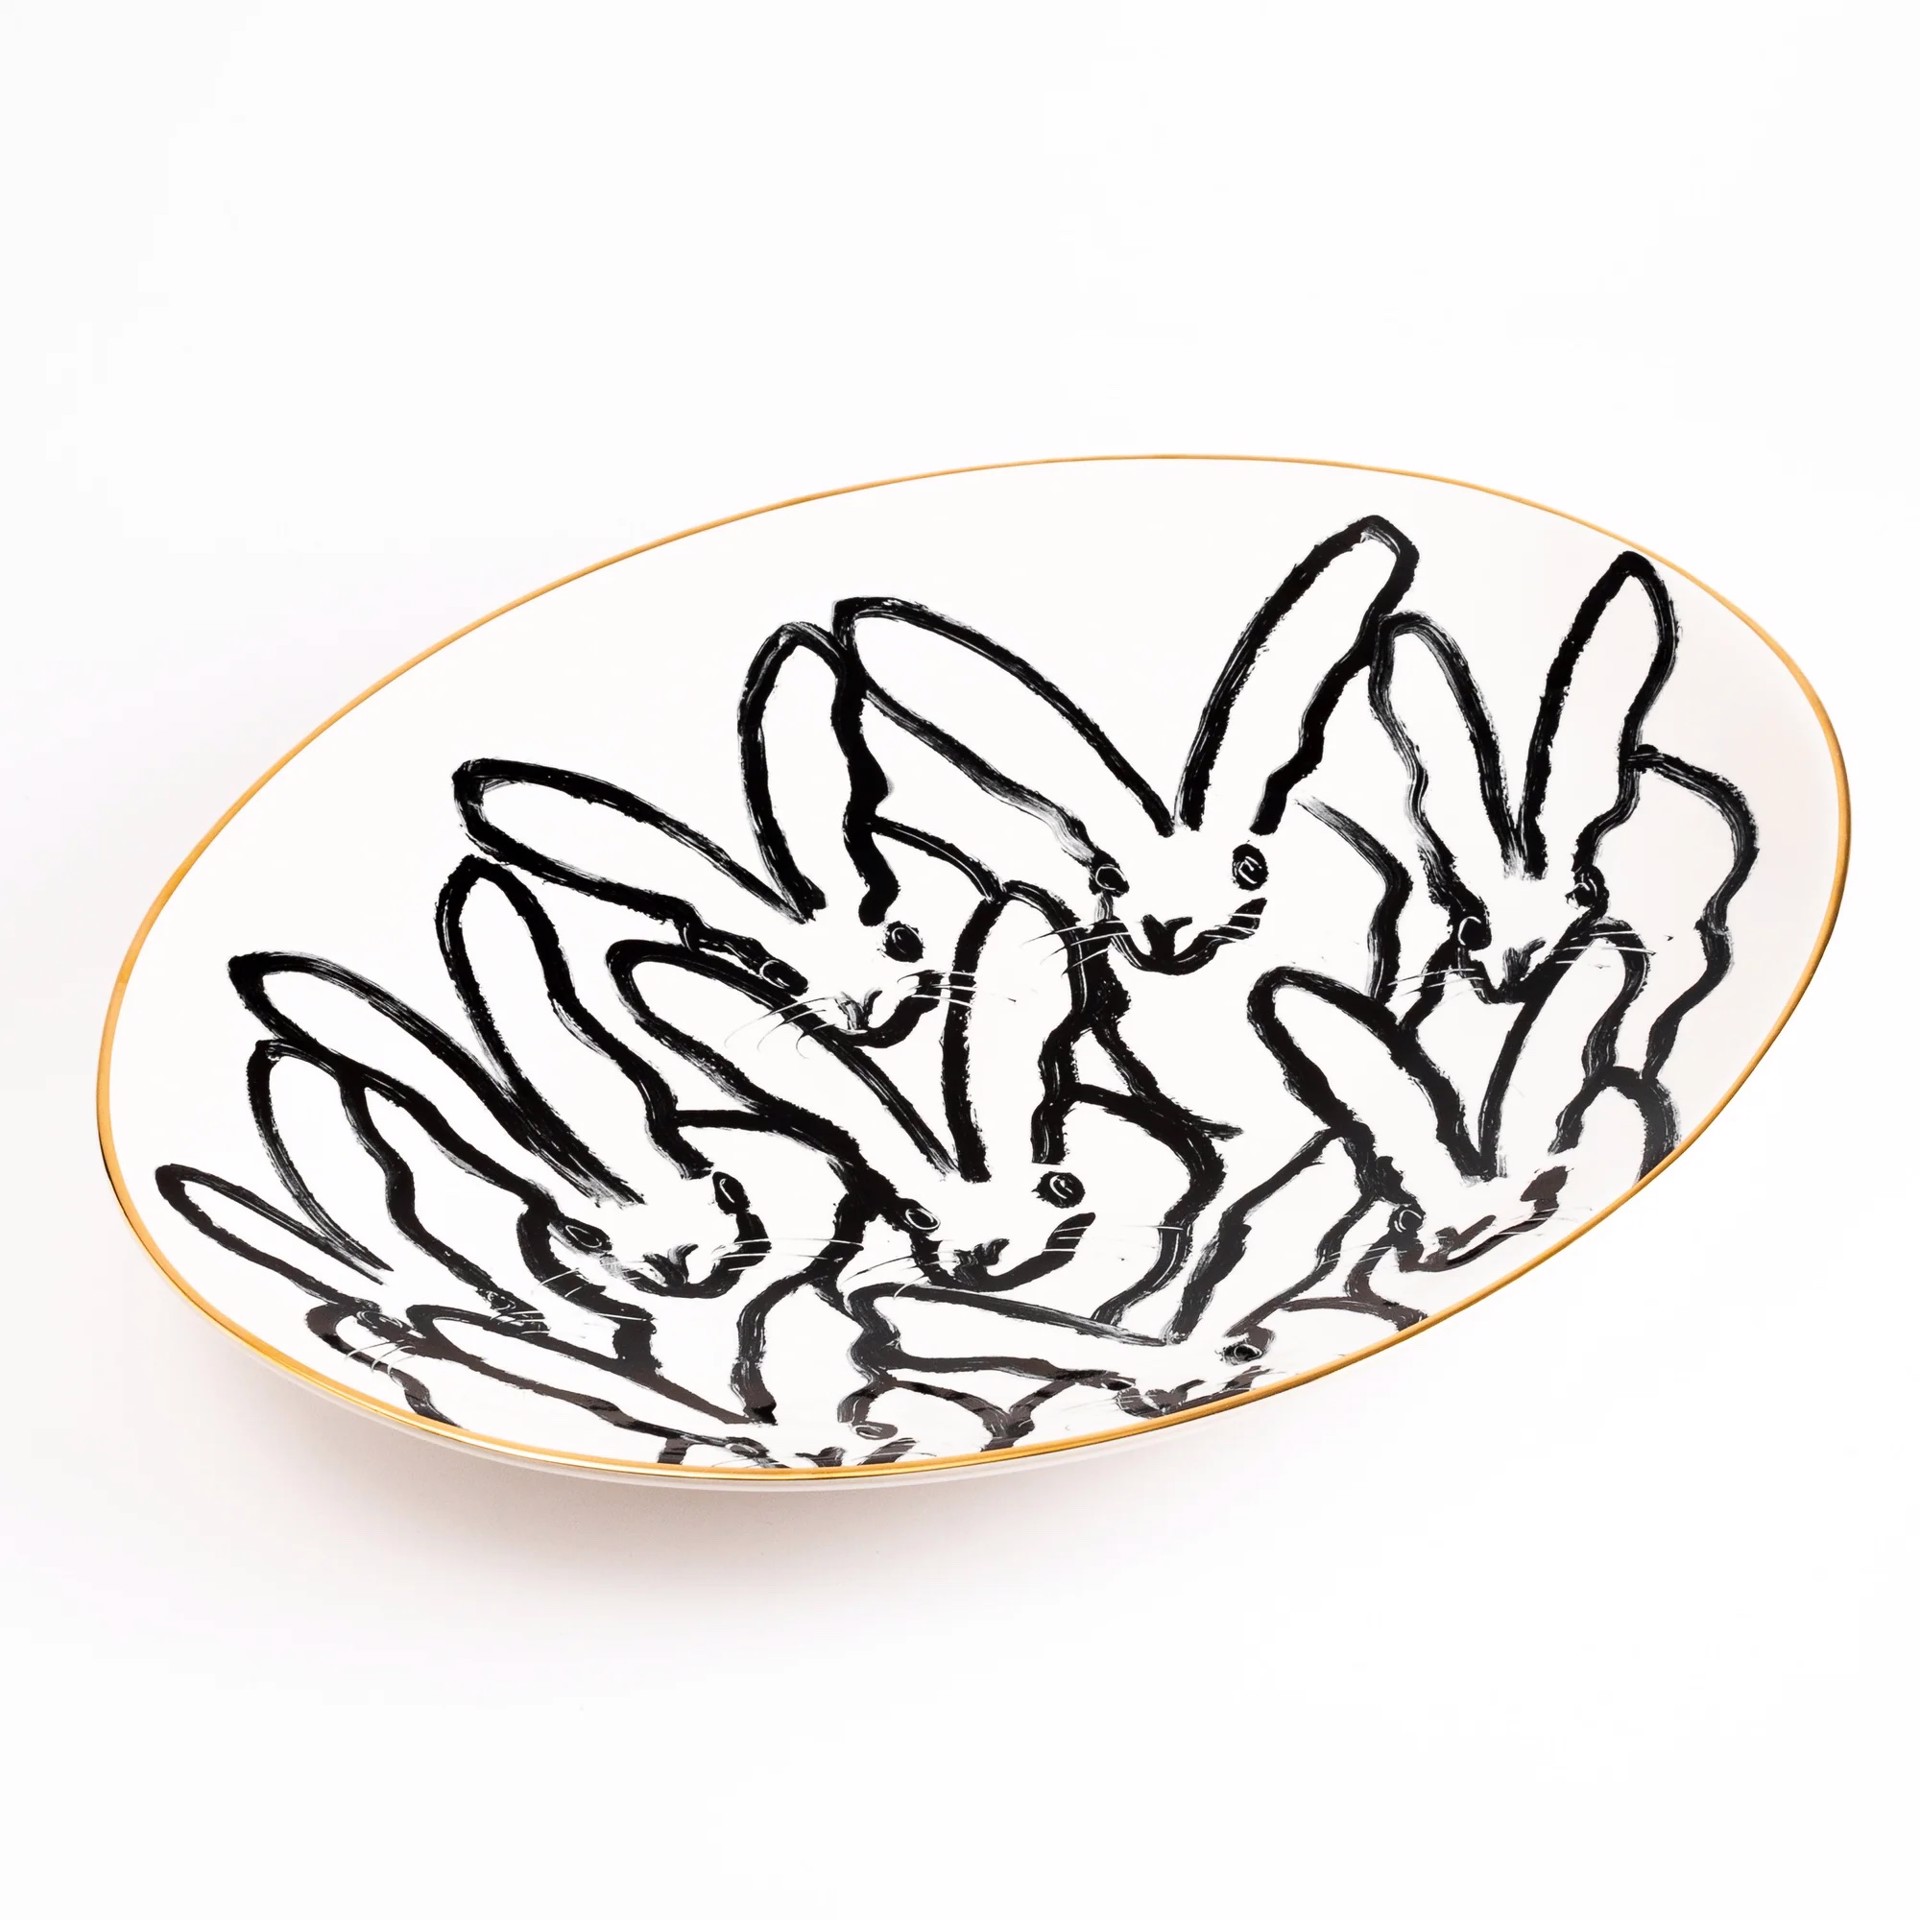 Rabbit Run Serving Platter with Hand Painted Gold Rim by Hunt Slonem (Hop Up Shop)